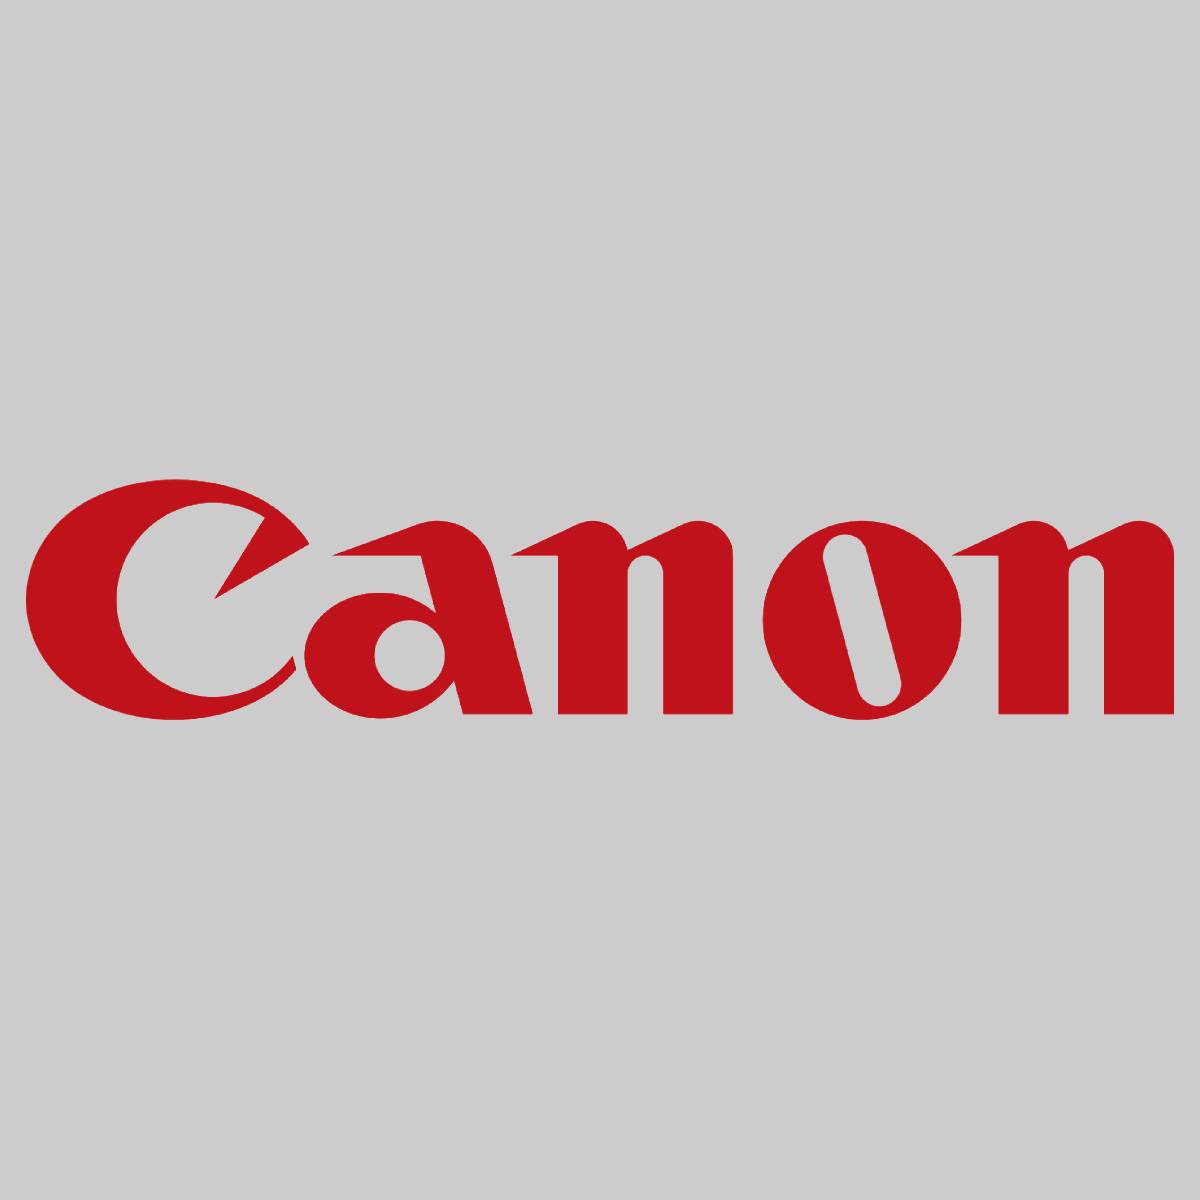 "Original Canon Fixing Assembly FM1-D741-010 ImageRunner Adv C5030 C5035 5240